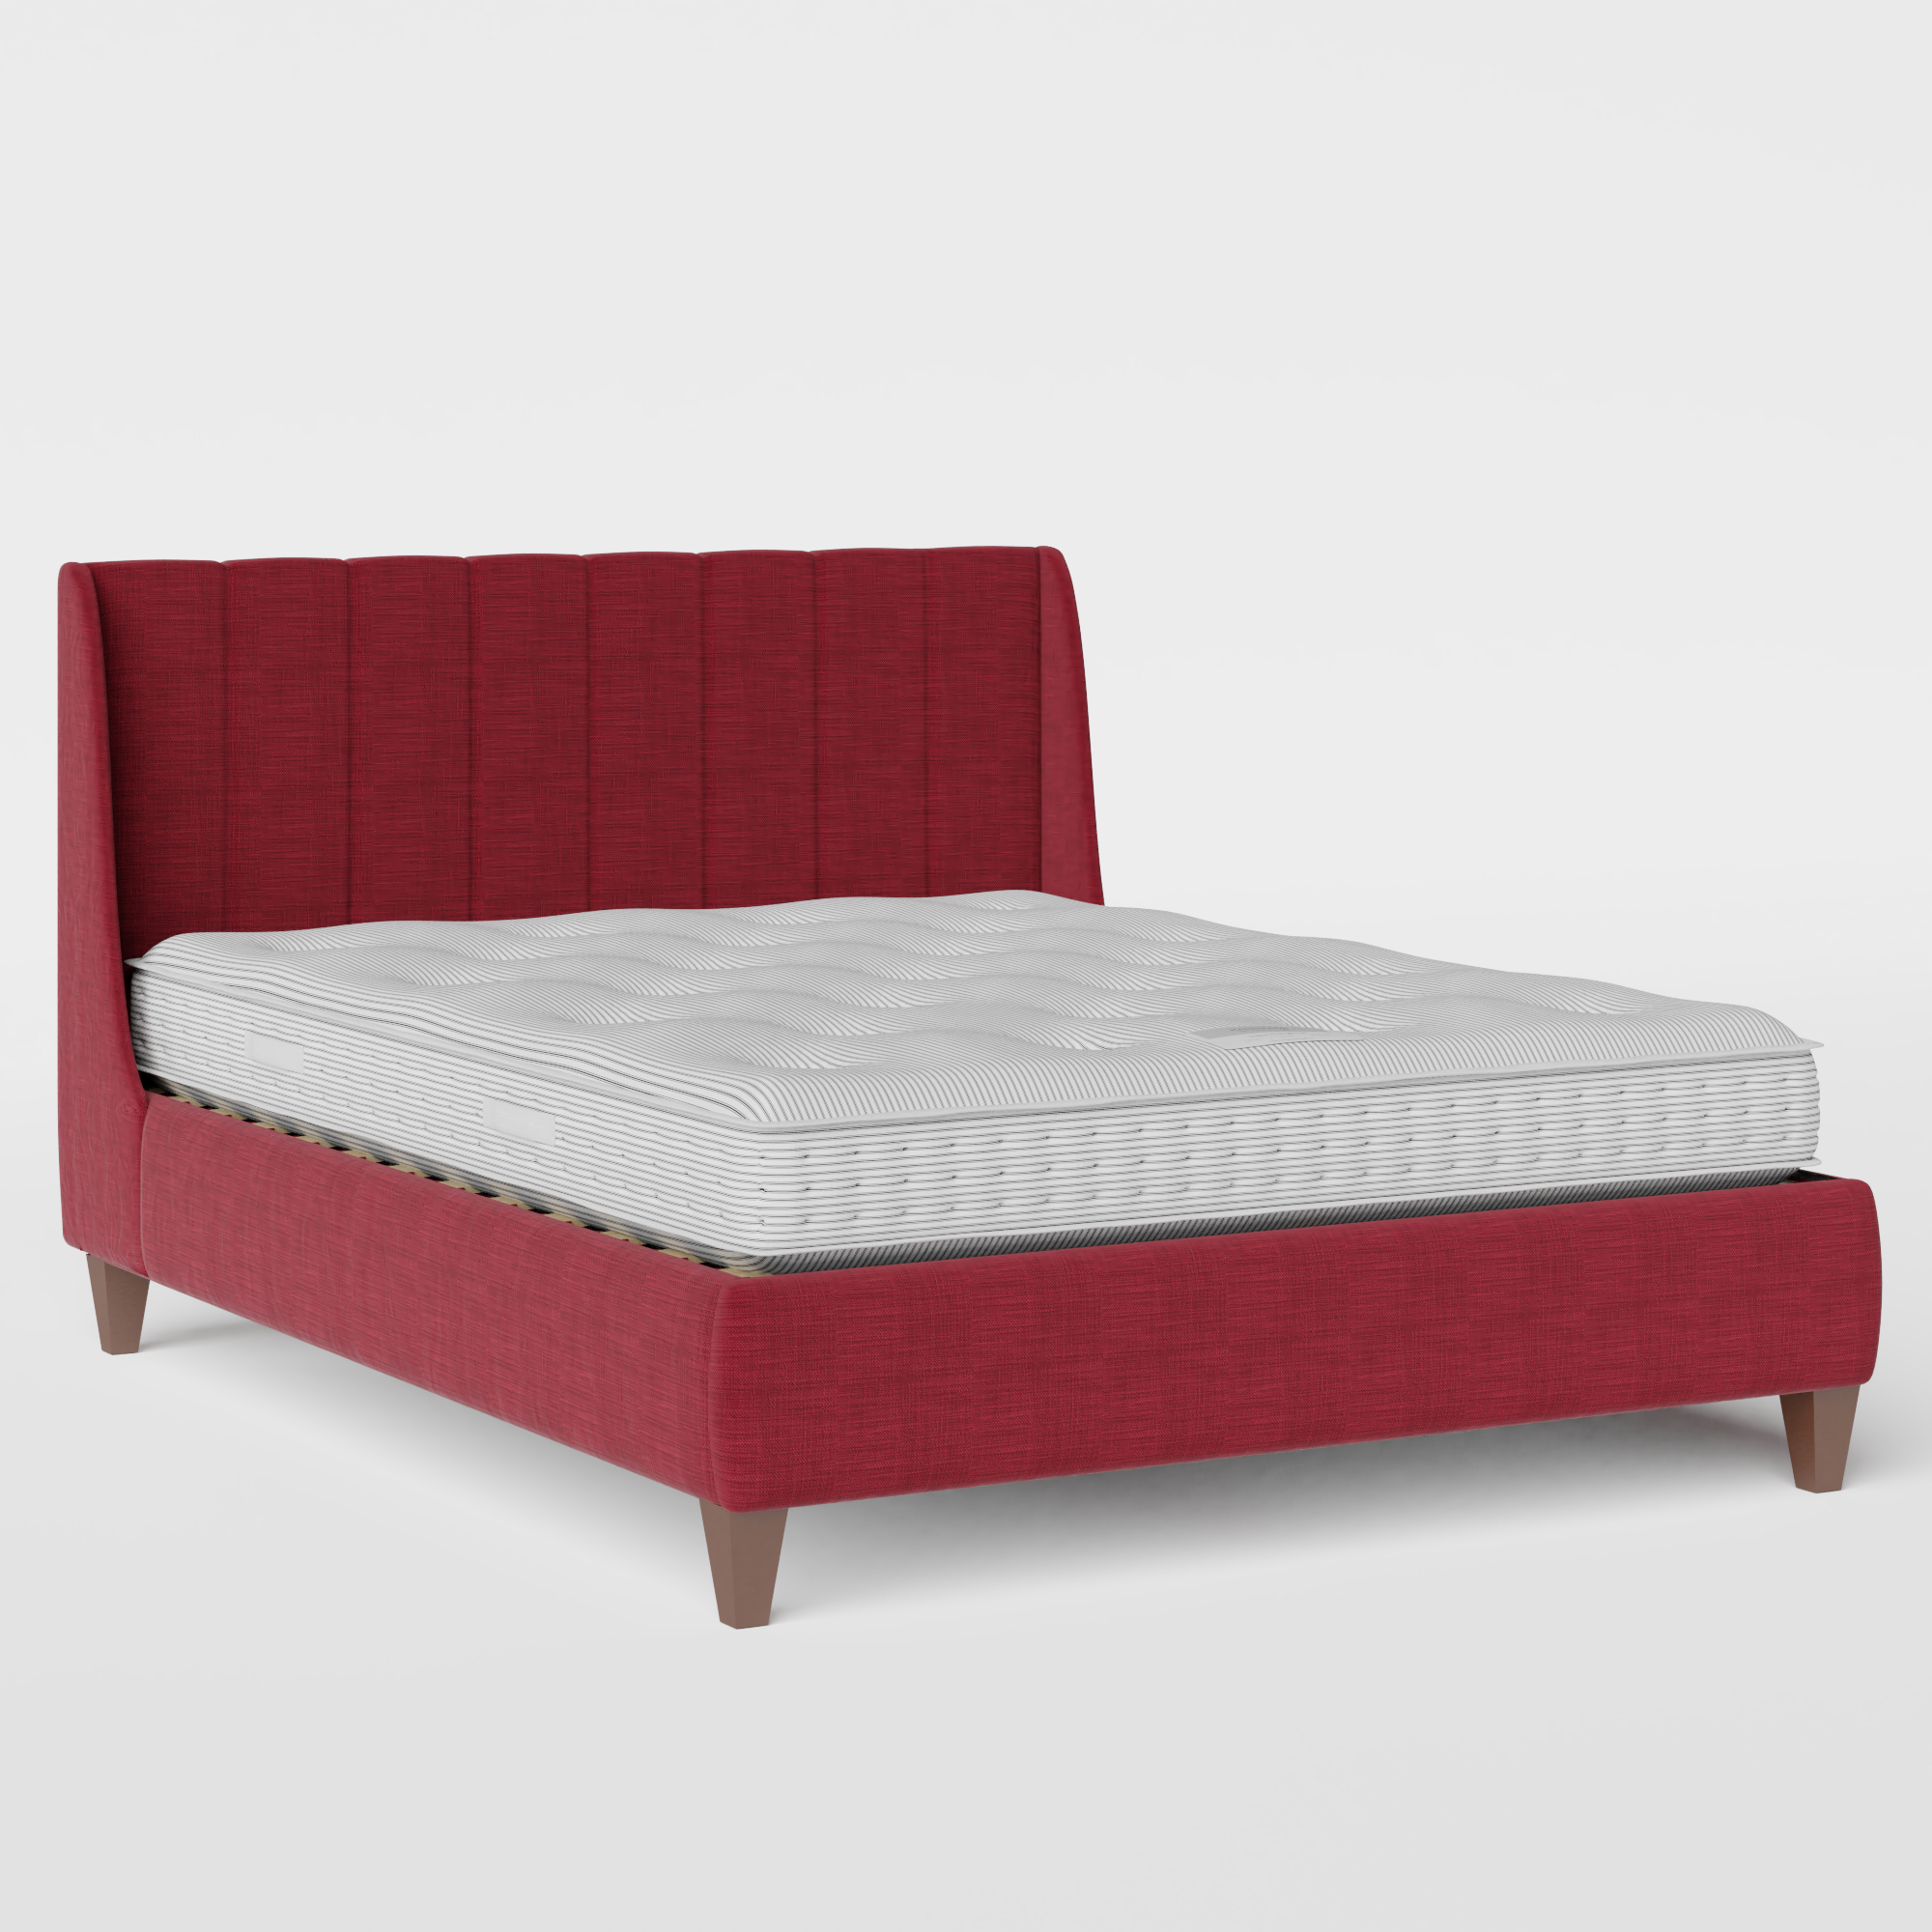 Sunderland Pleated cama tapizada en tela cherry